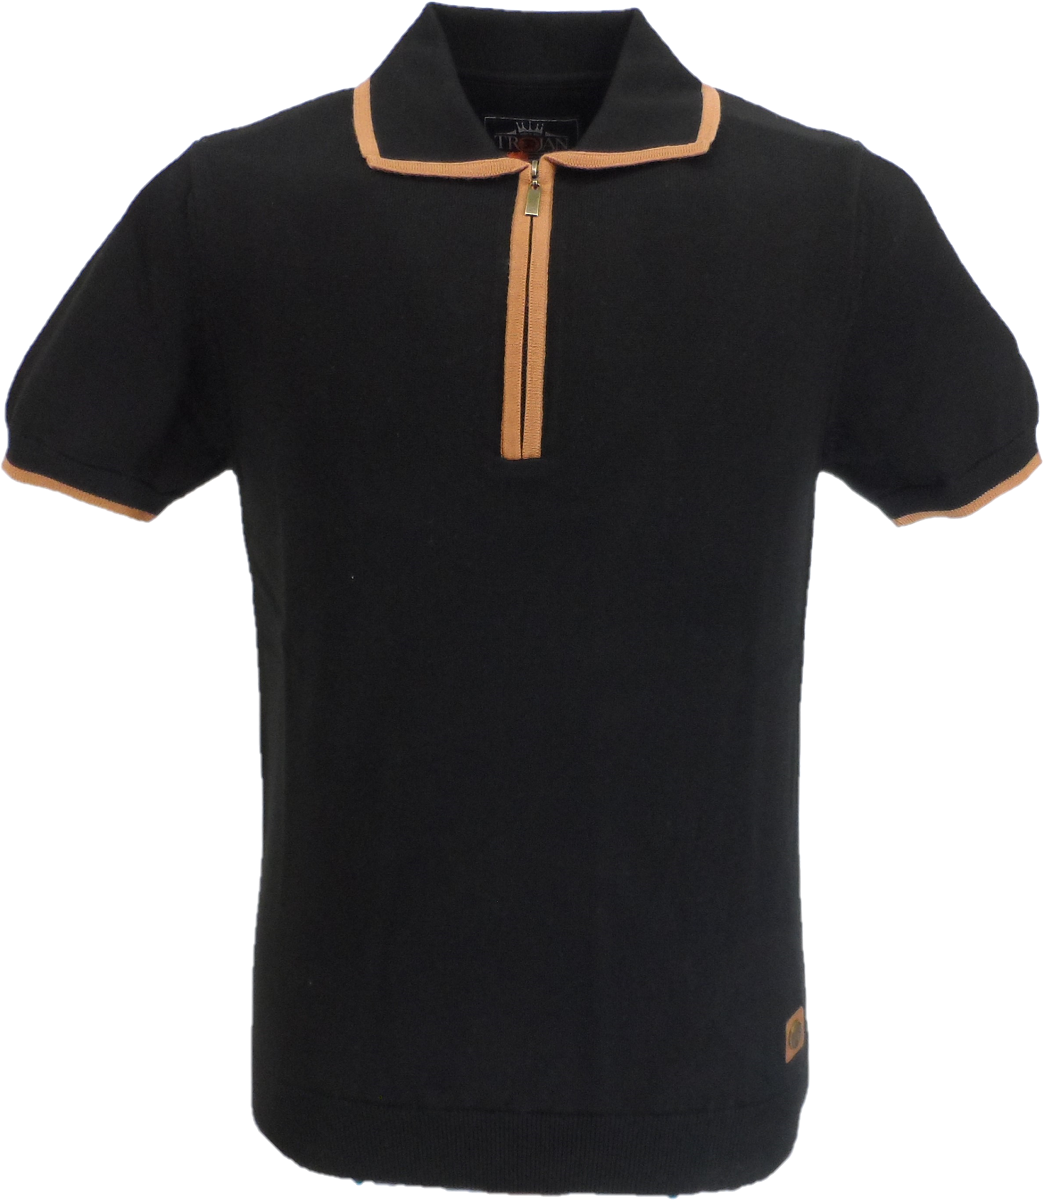 Trojan Records Mens Black Zipped Knitted Polo Shirt